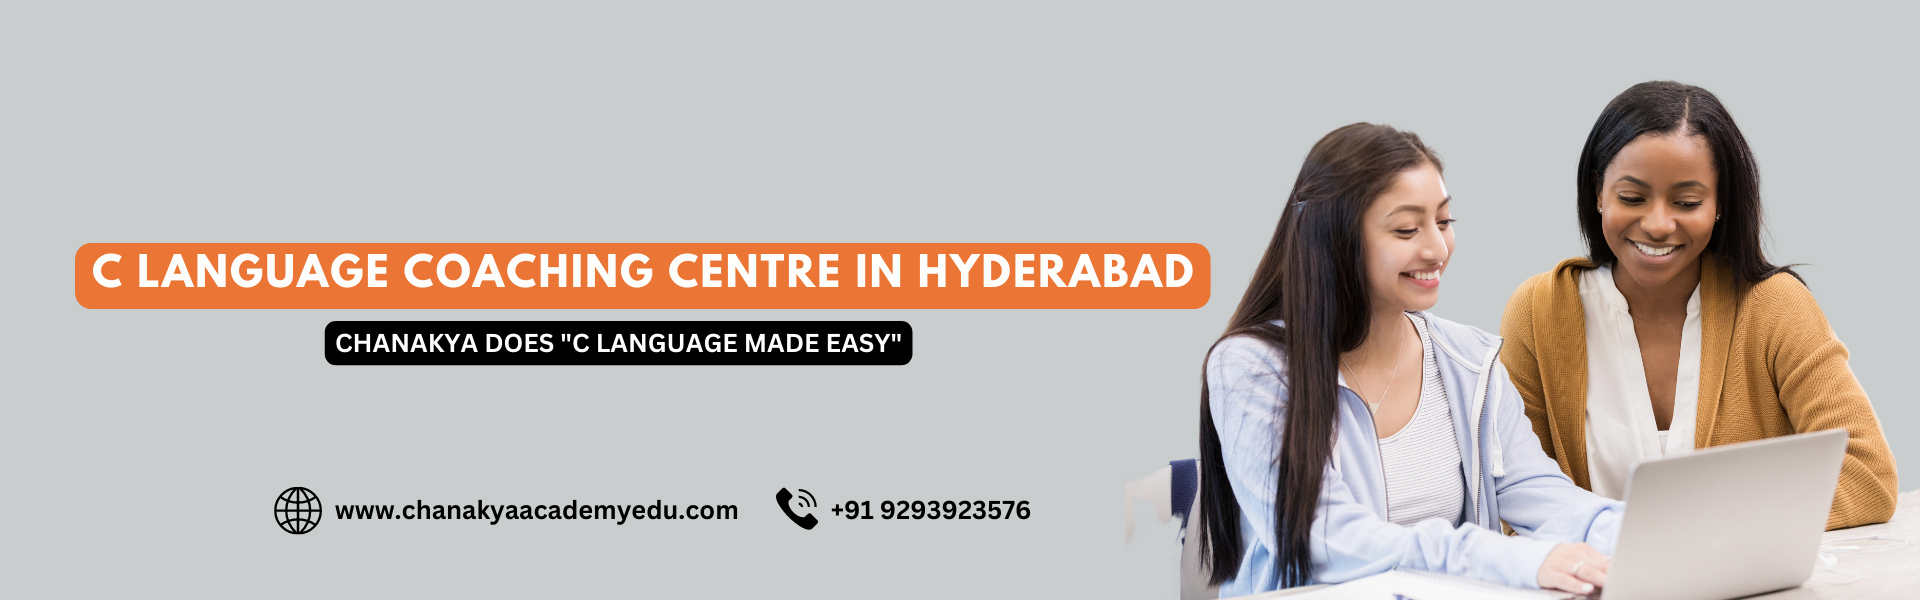 Chanakya C Language Coaching Centre in Hyderabad